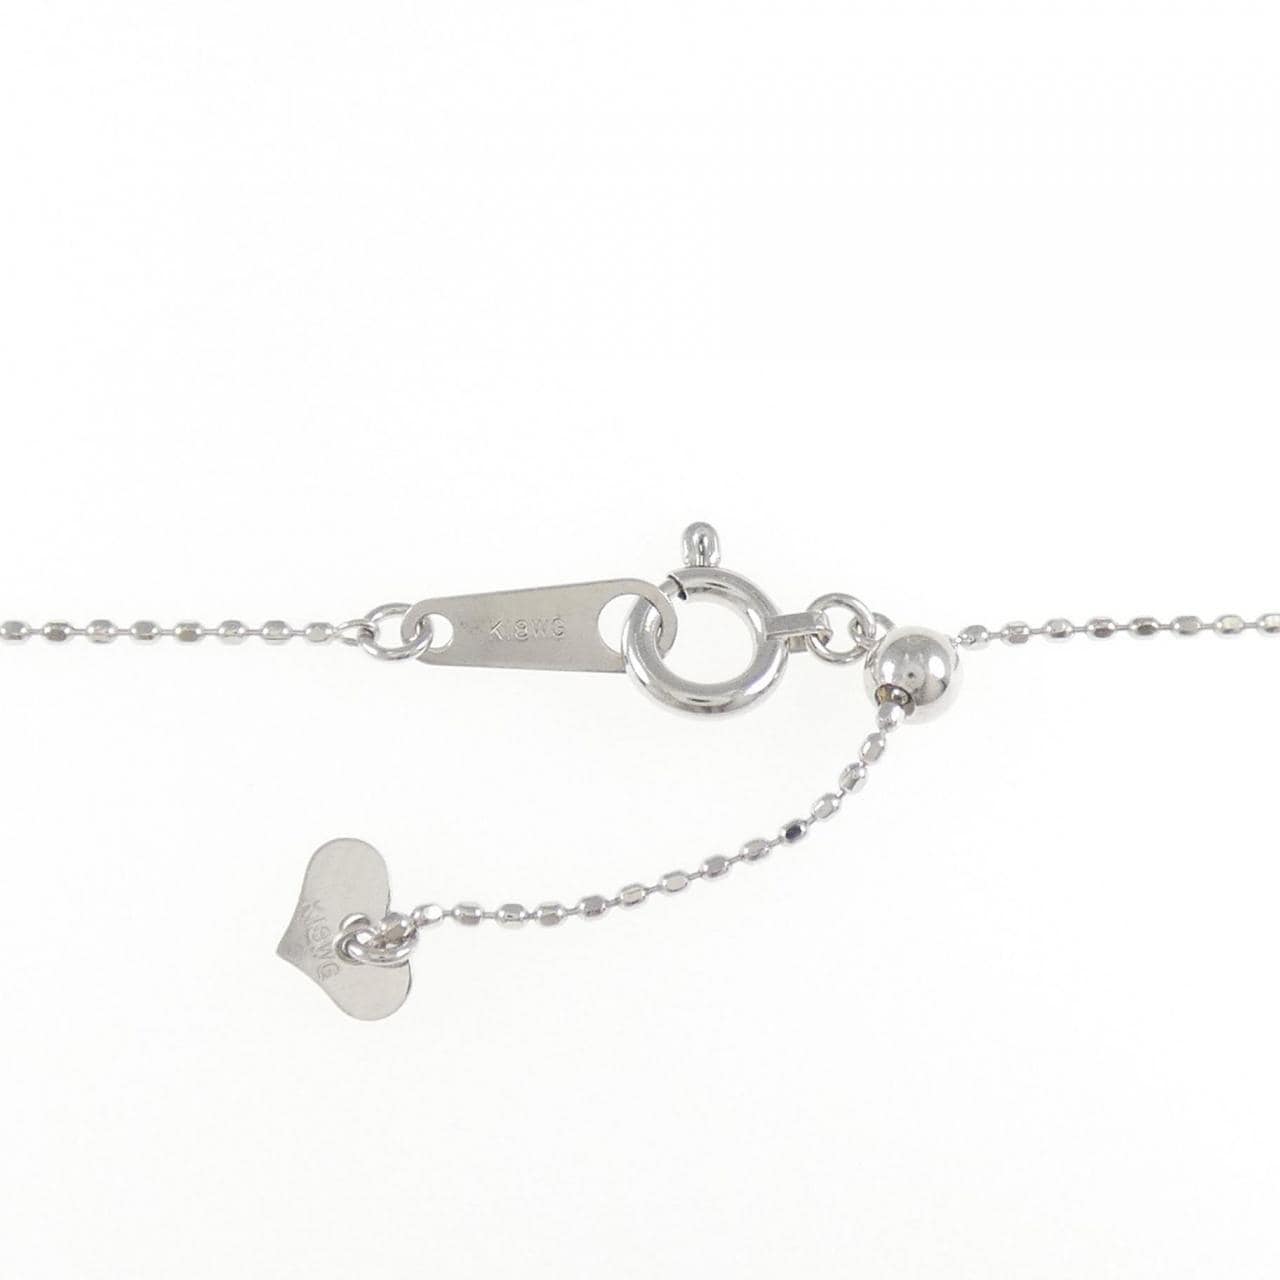 K18WG cross Diamond necklace